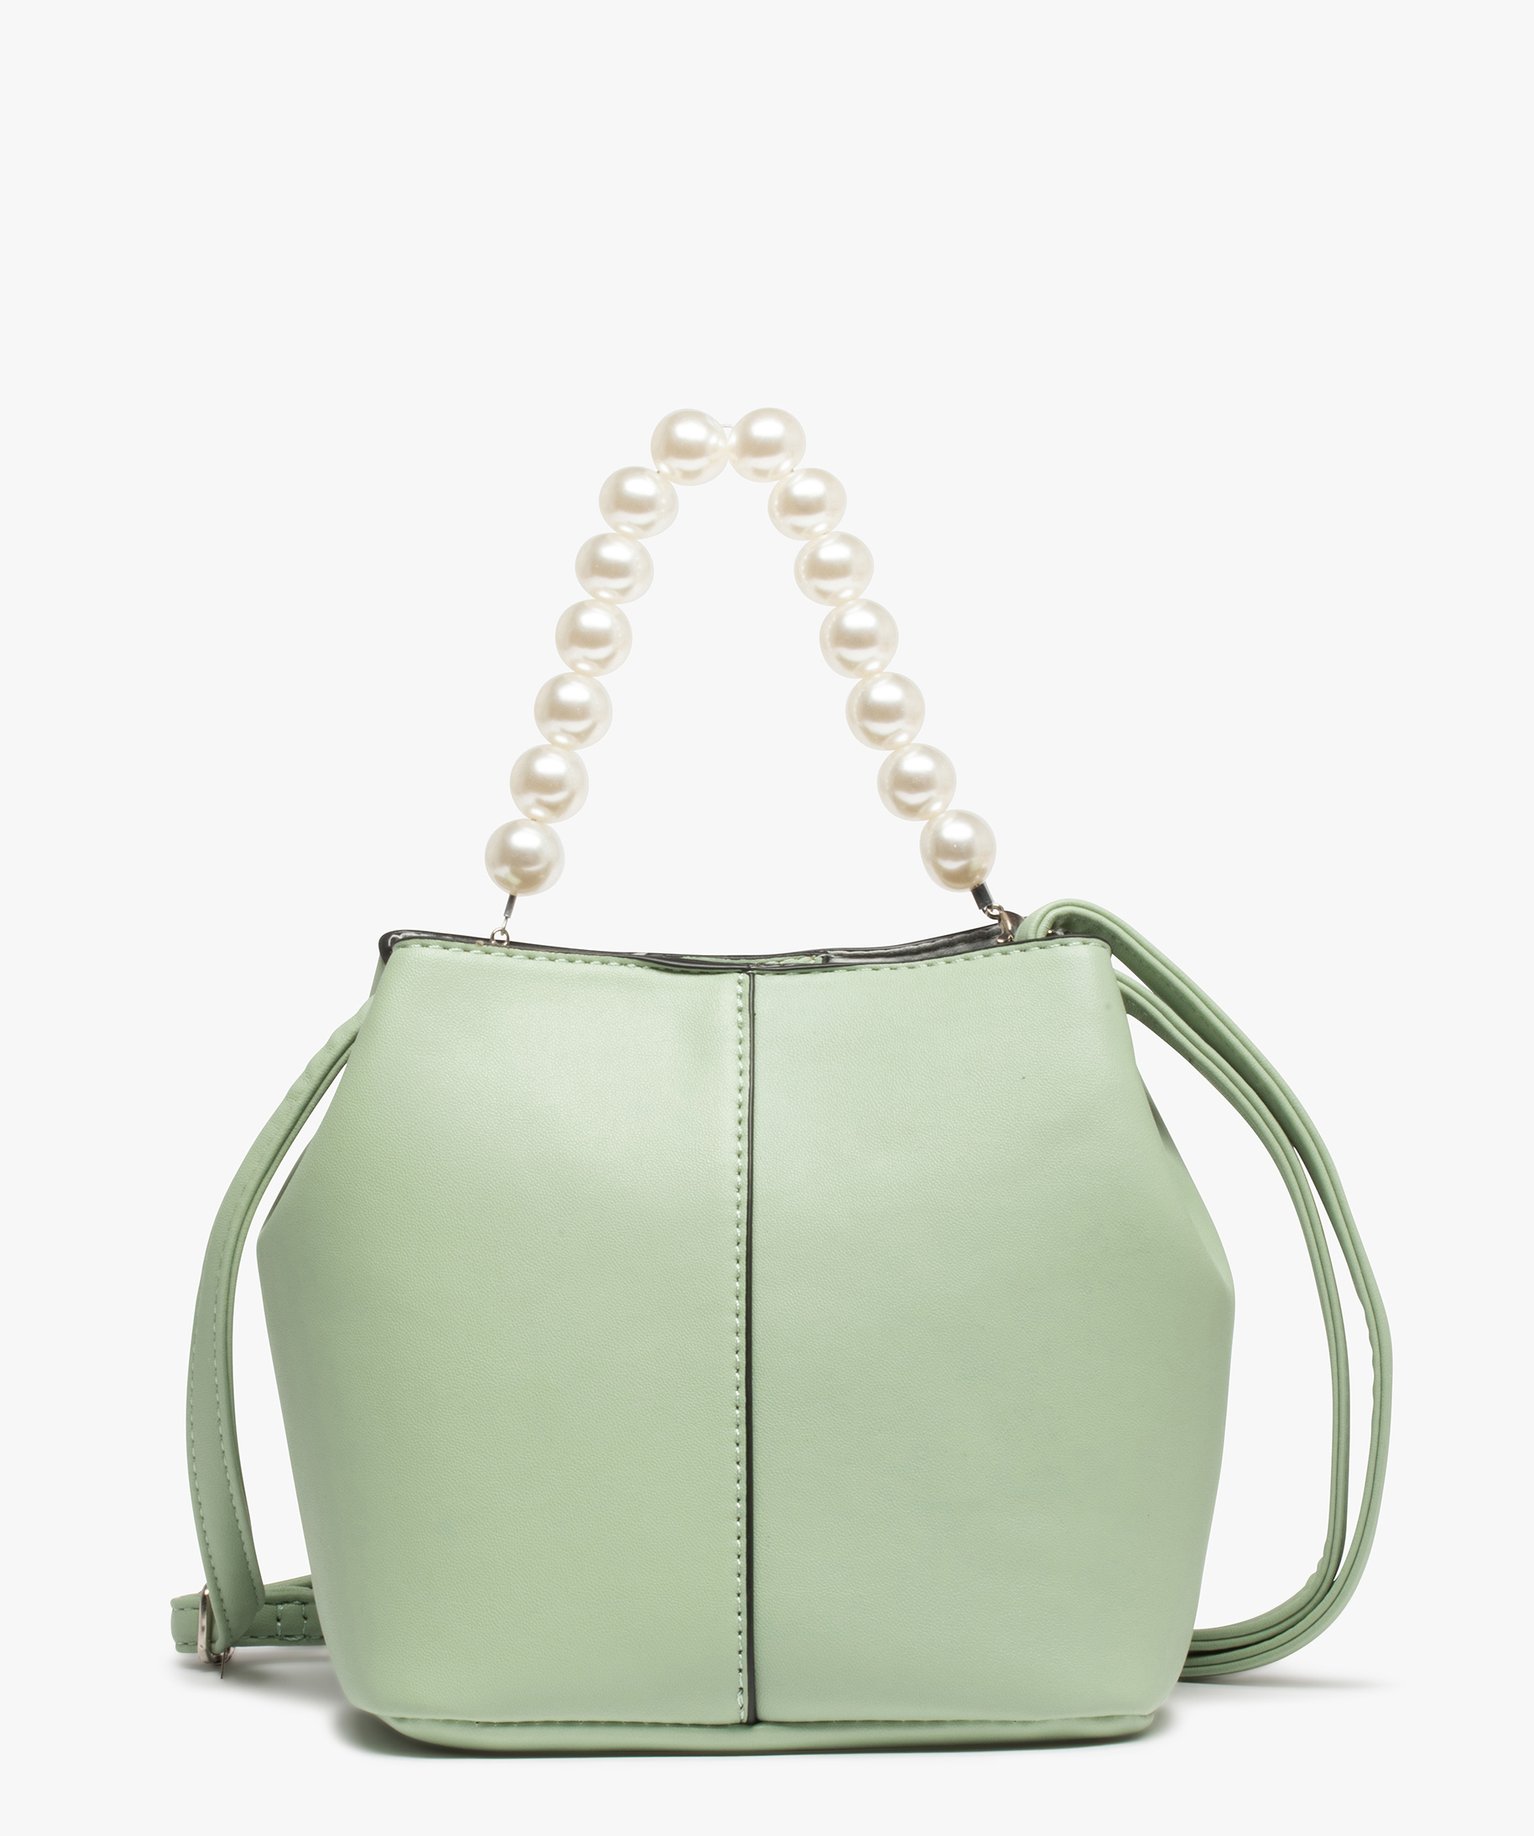 sac femme petit format avec anse en perles amovible vert sacs a main